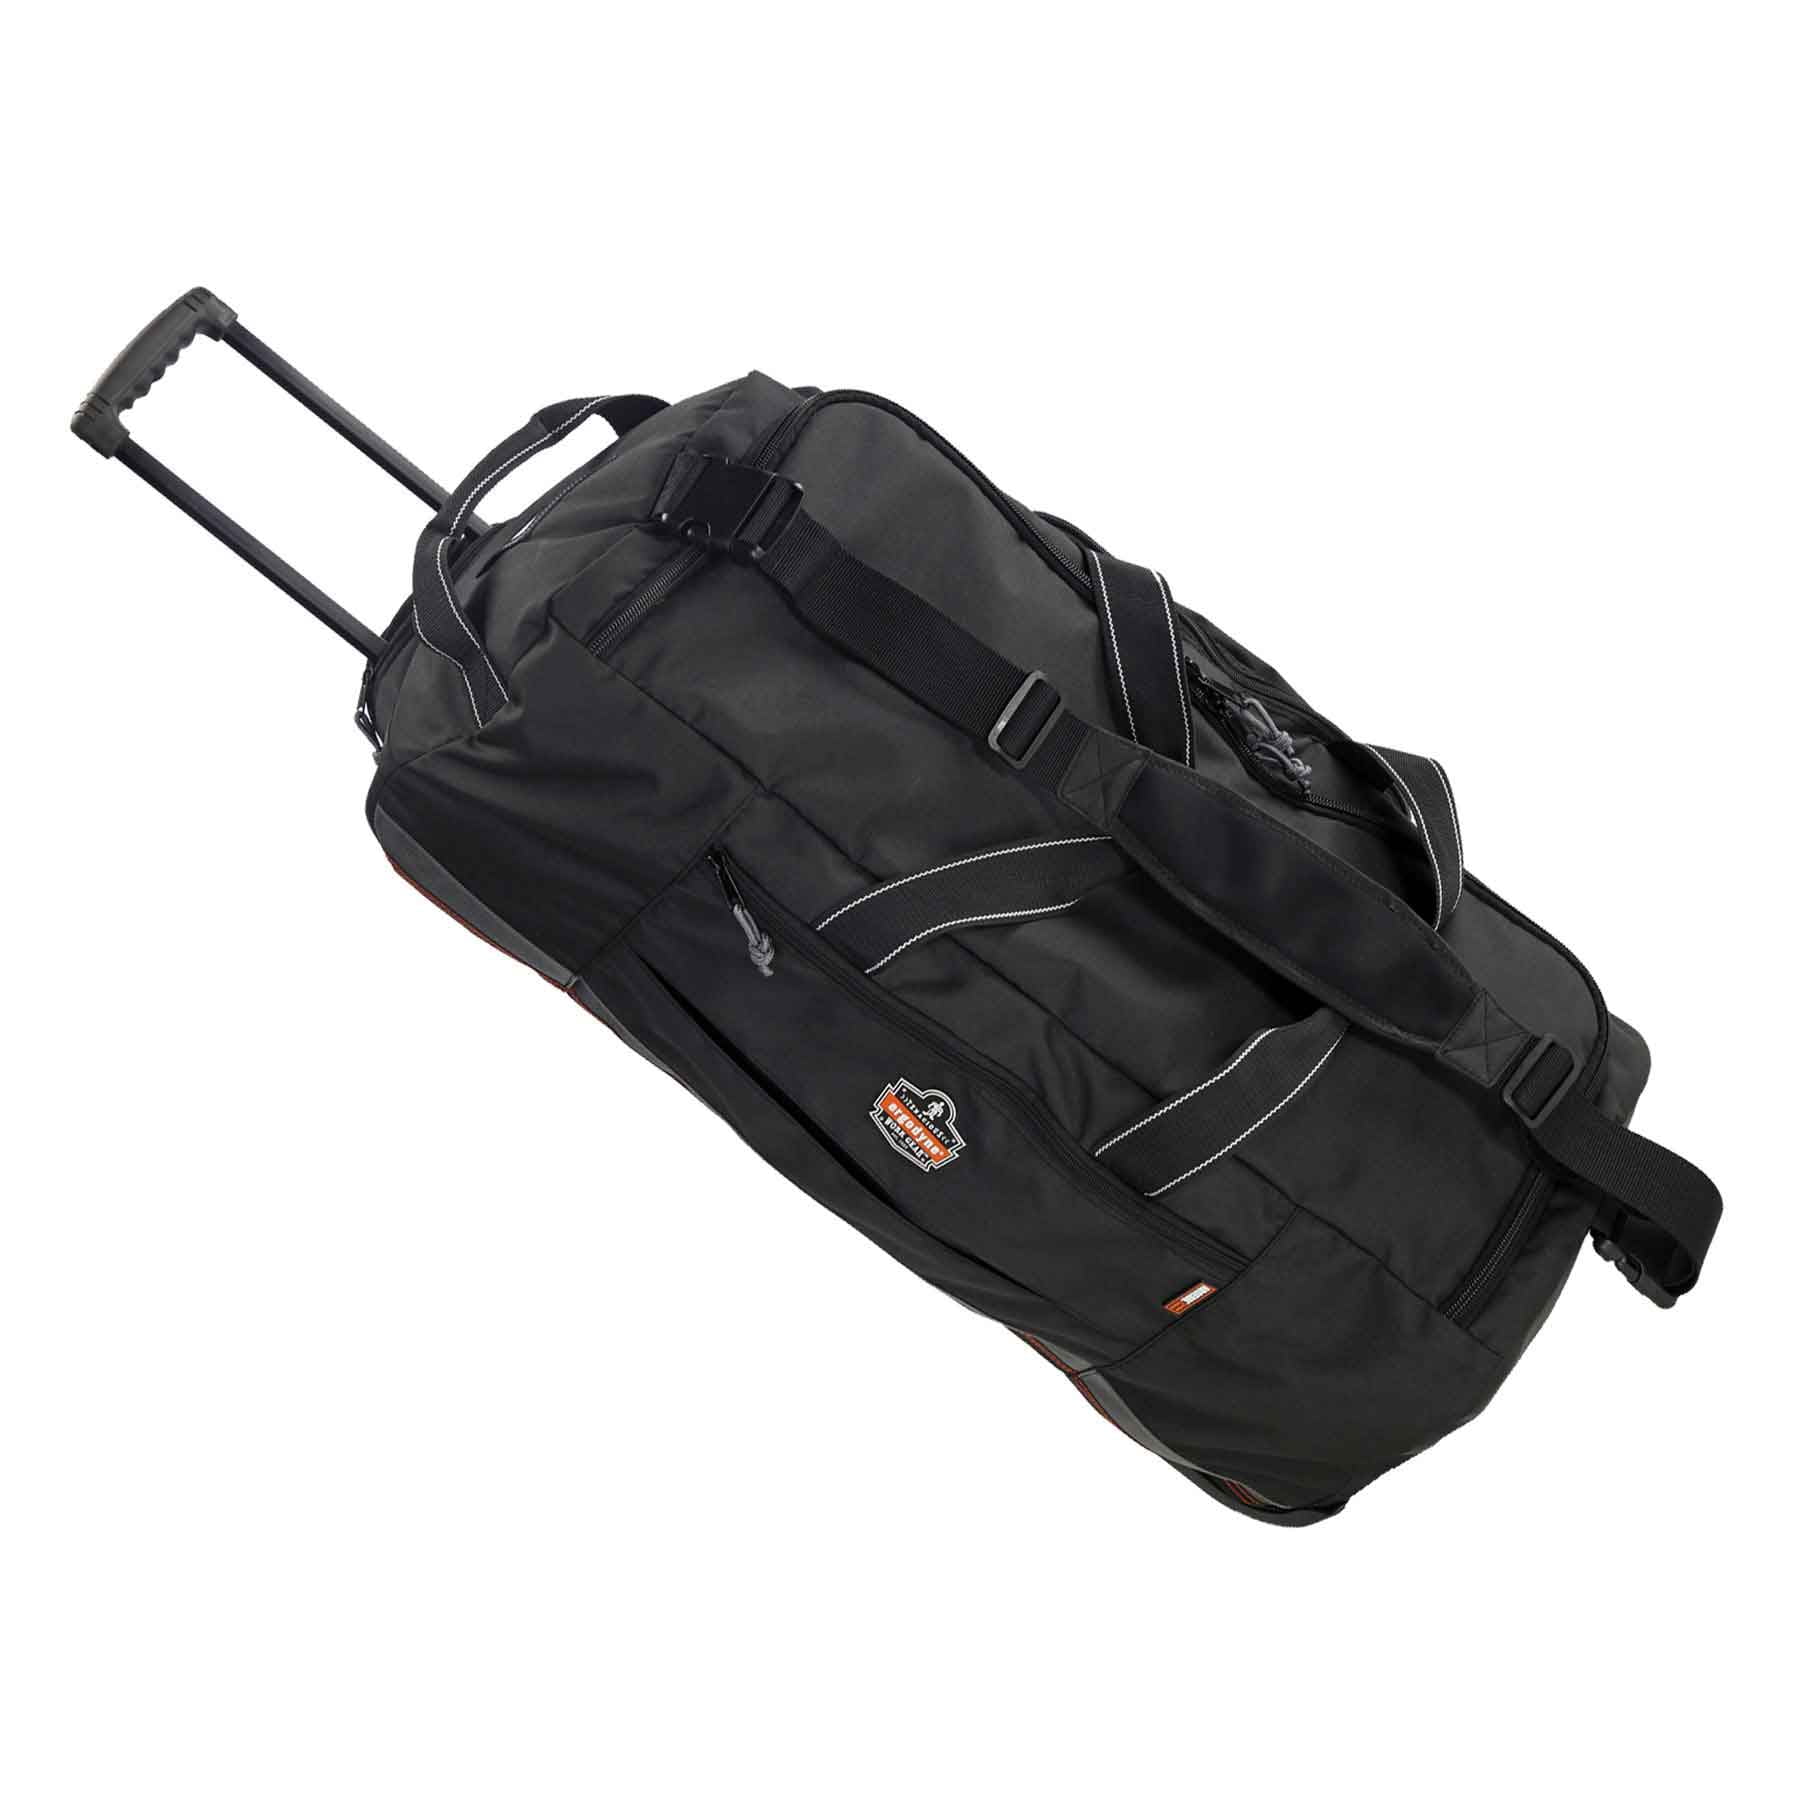 Ergodyne Arsenal® 5120 Large Wheeled Gear Bag, Black - www.bagsaleusa.com - www.bagsaleusa.com